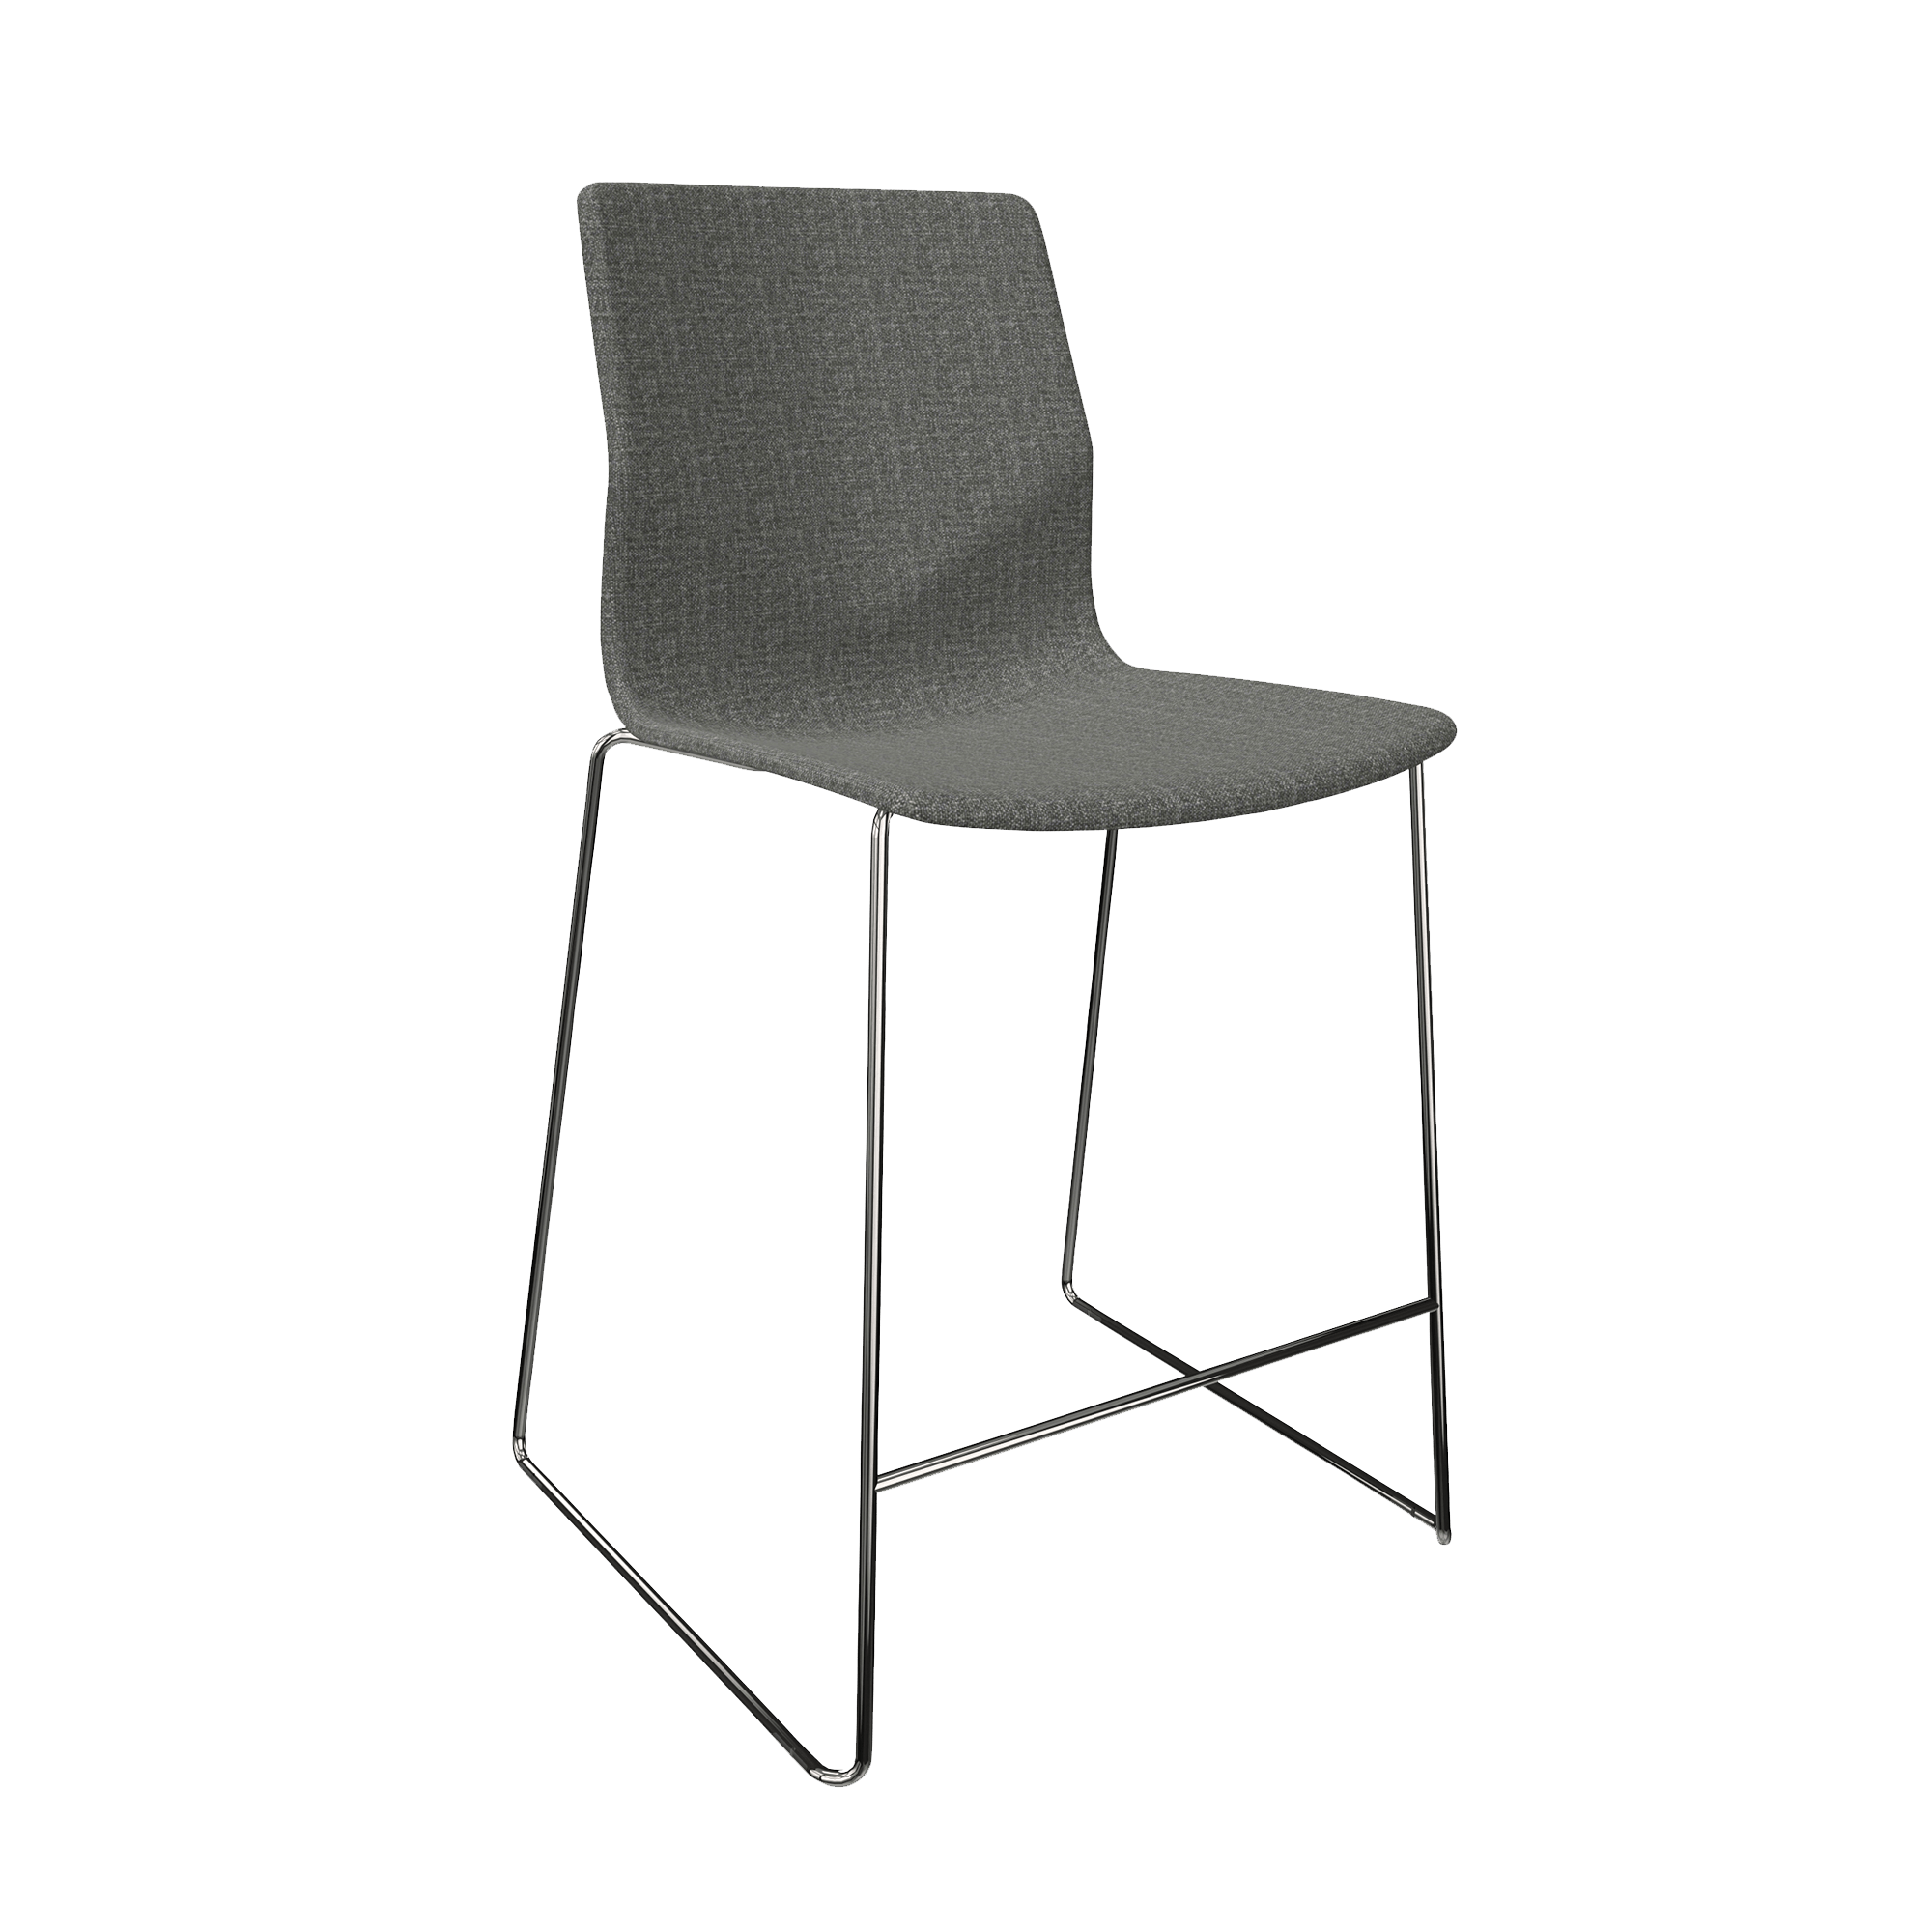 designer desk chair with metal legs